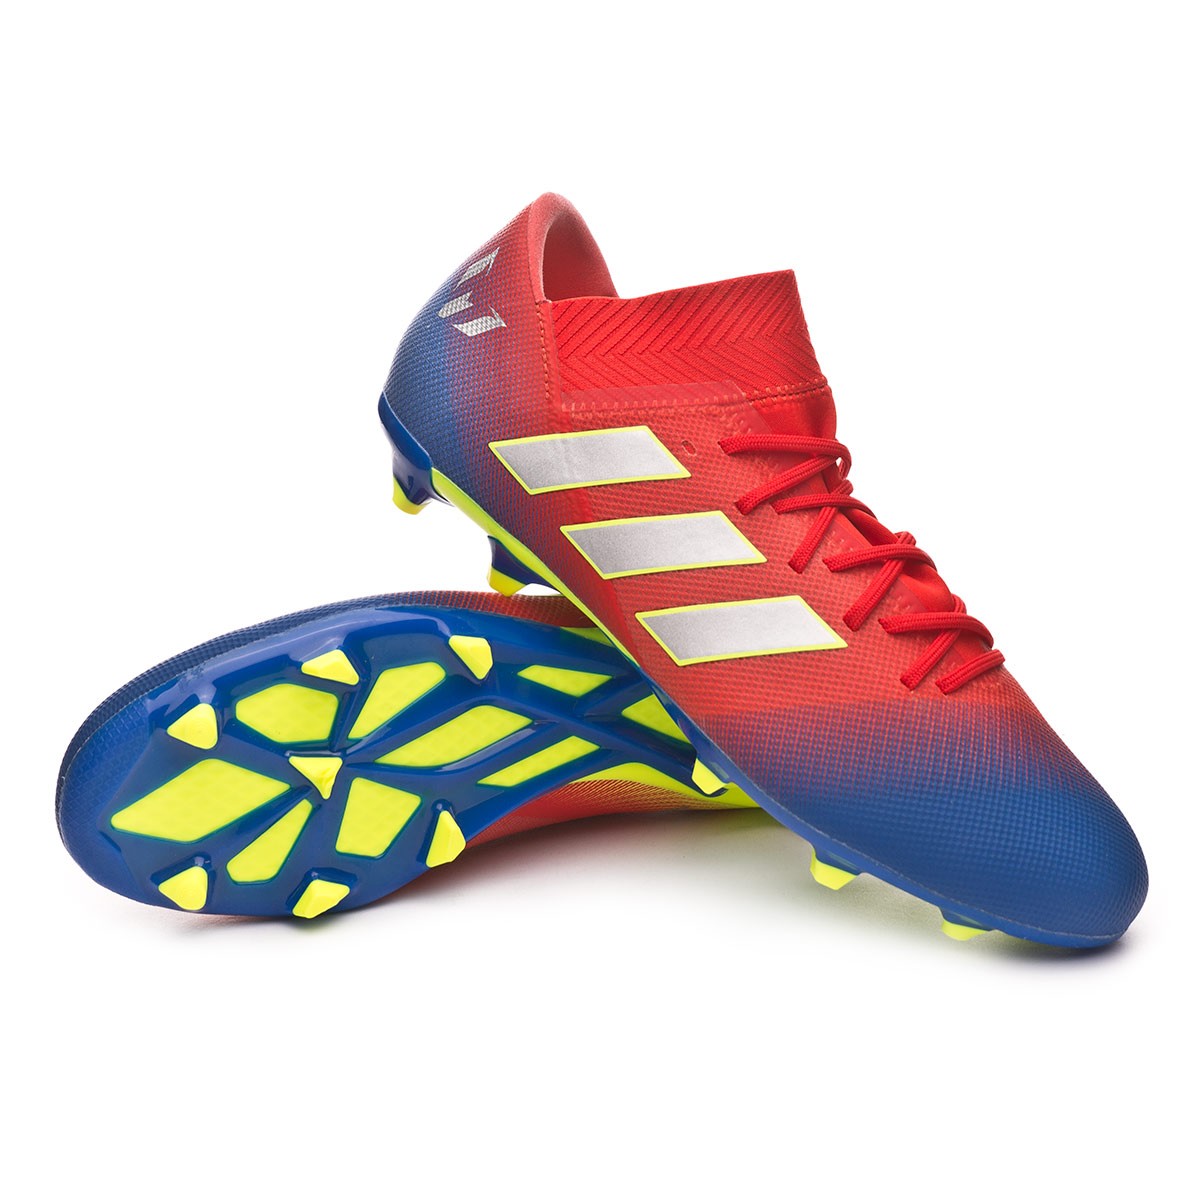 Football Boots adidas Nemeziz Messi 18 